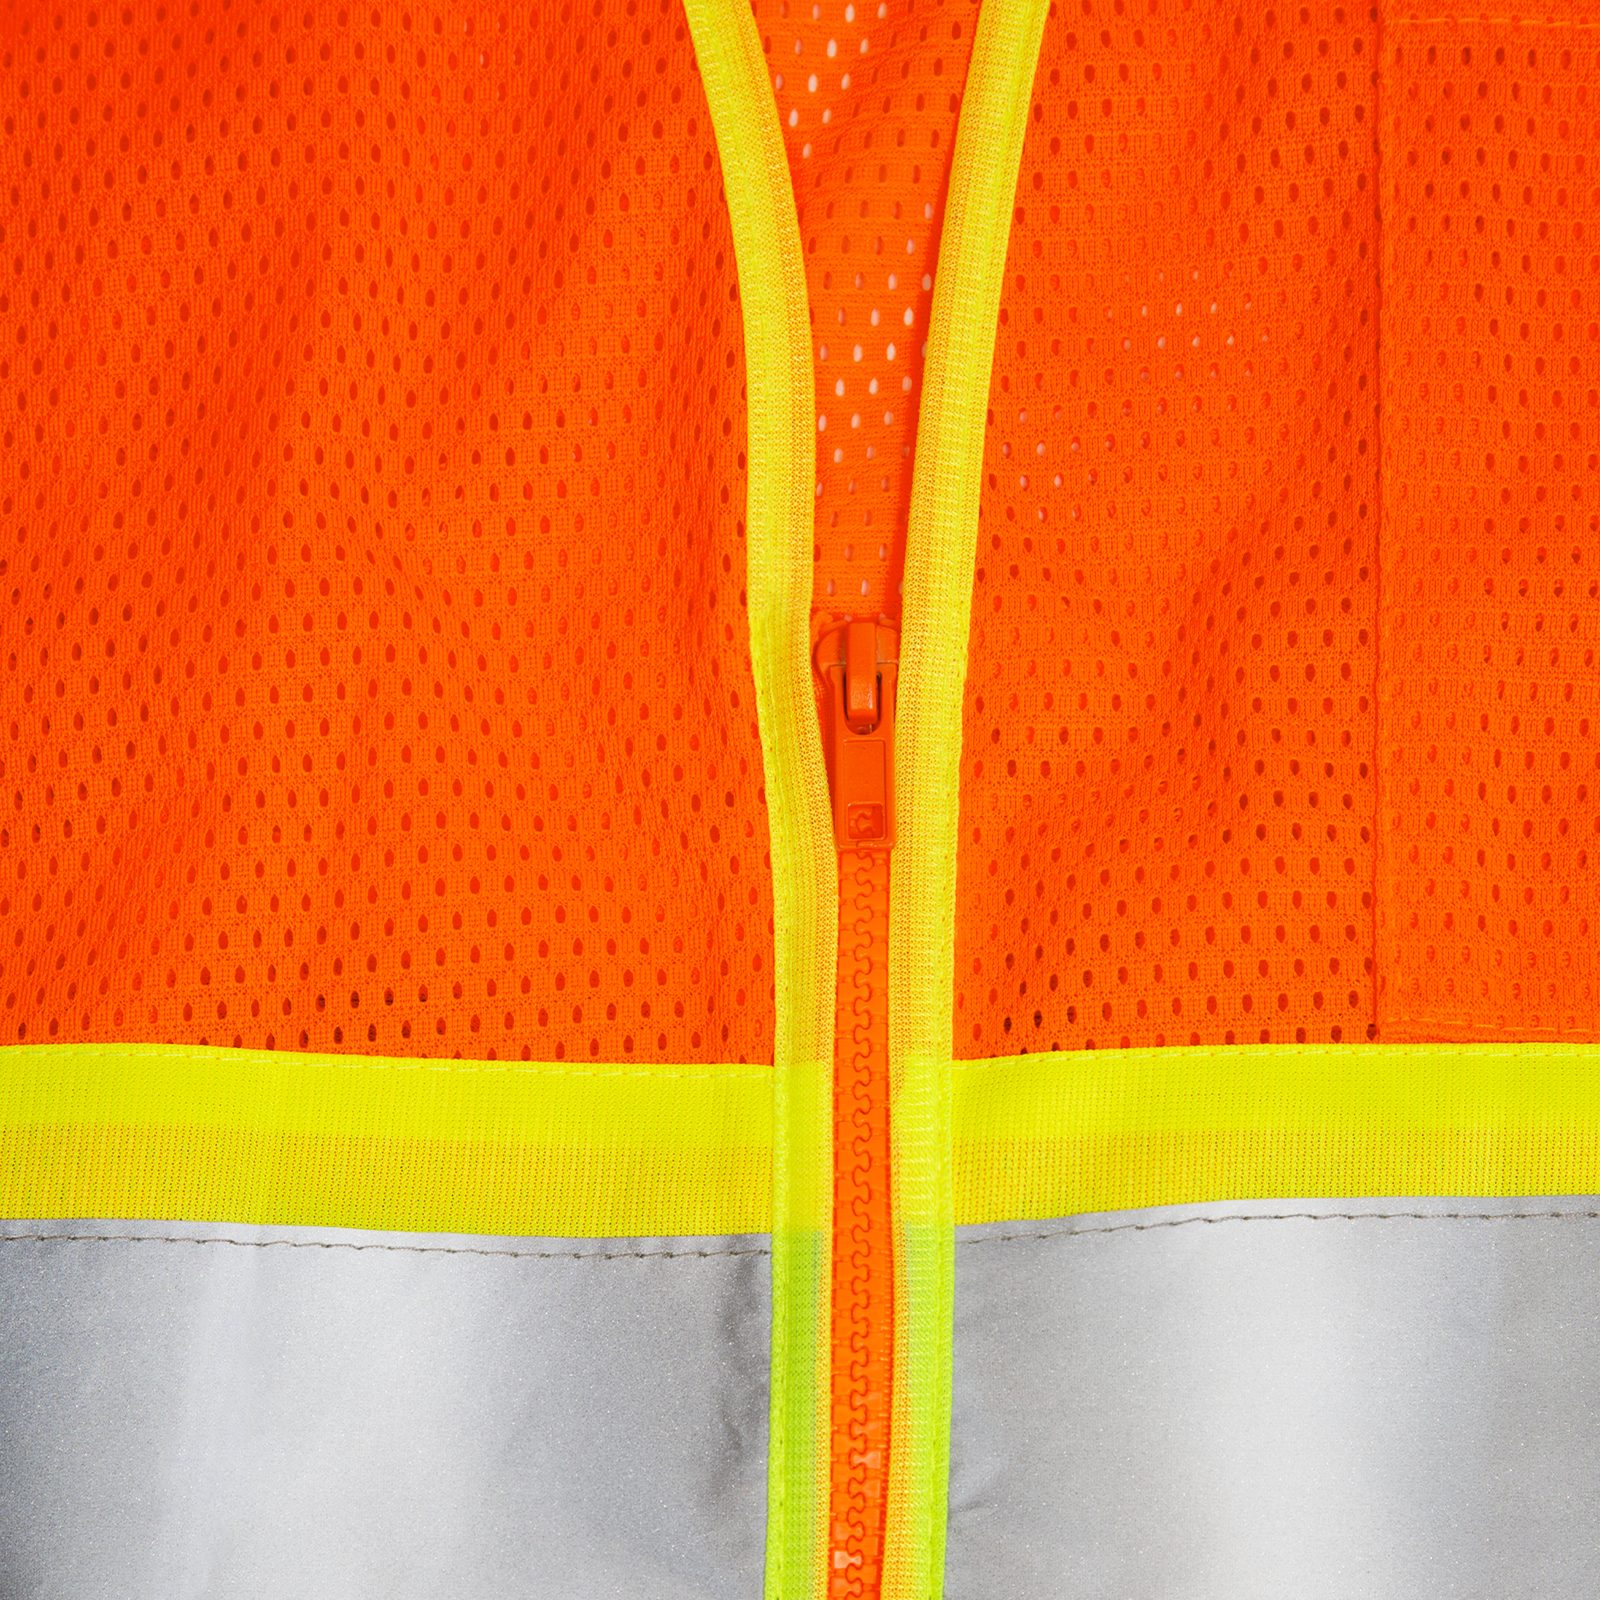 Printed Hi-Vis Mesh Safety Vest with 2” Reflective Strips and Pocket - Lime